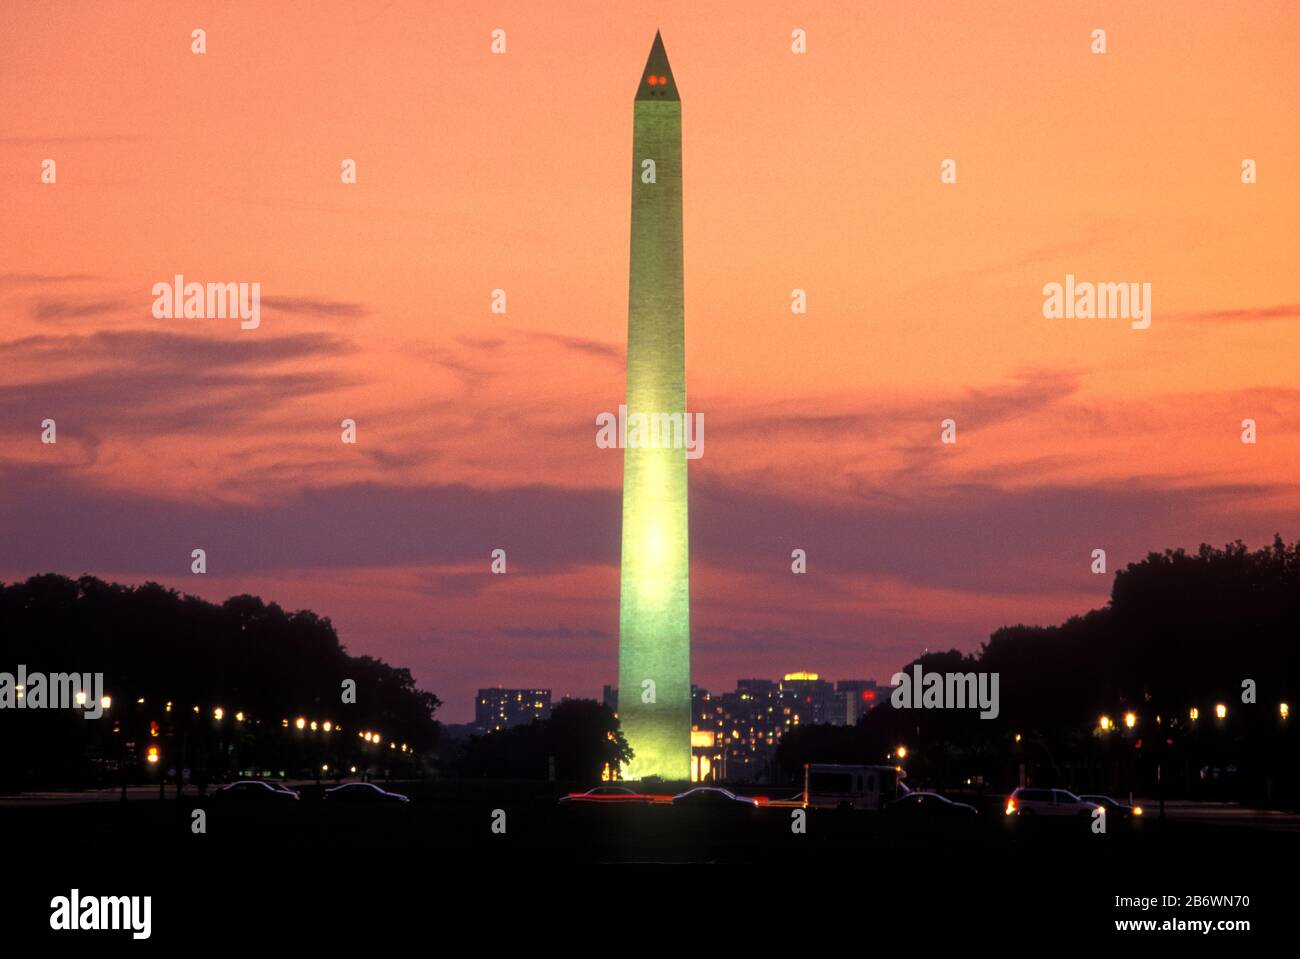 El Monumento a Washington Washington DC, EE.UU. Foto de stock